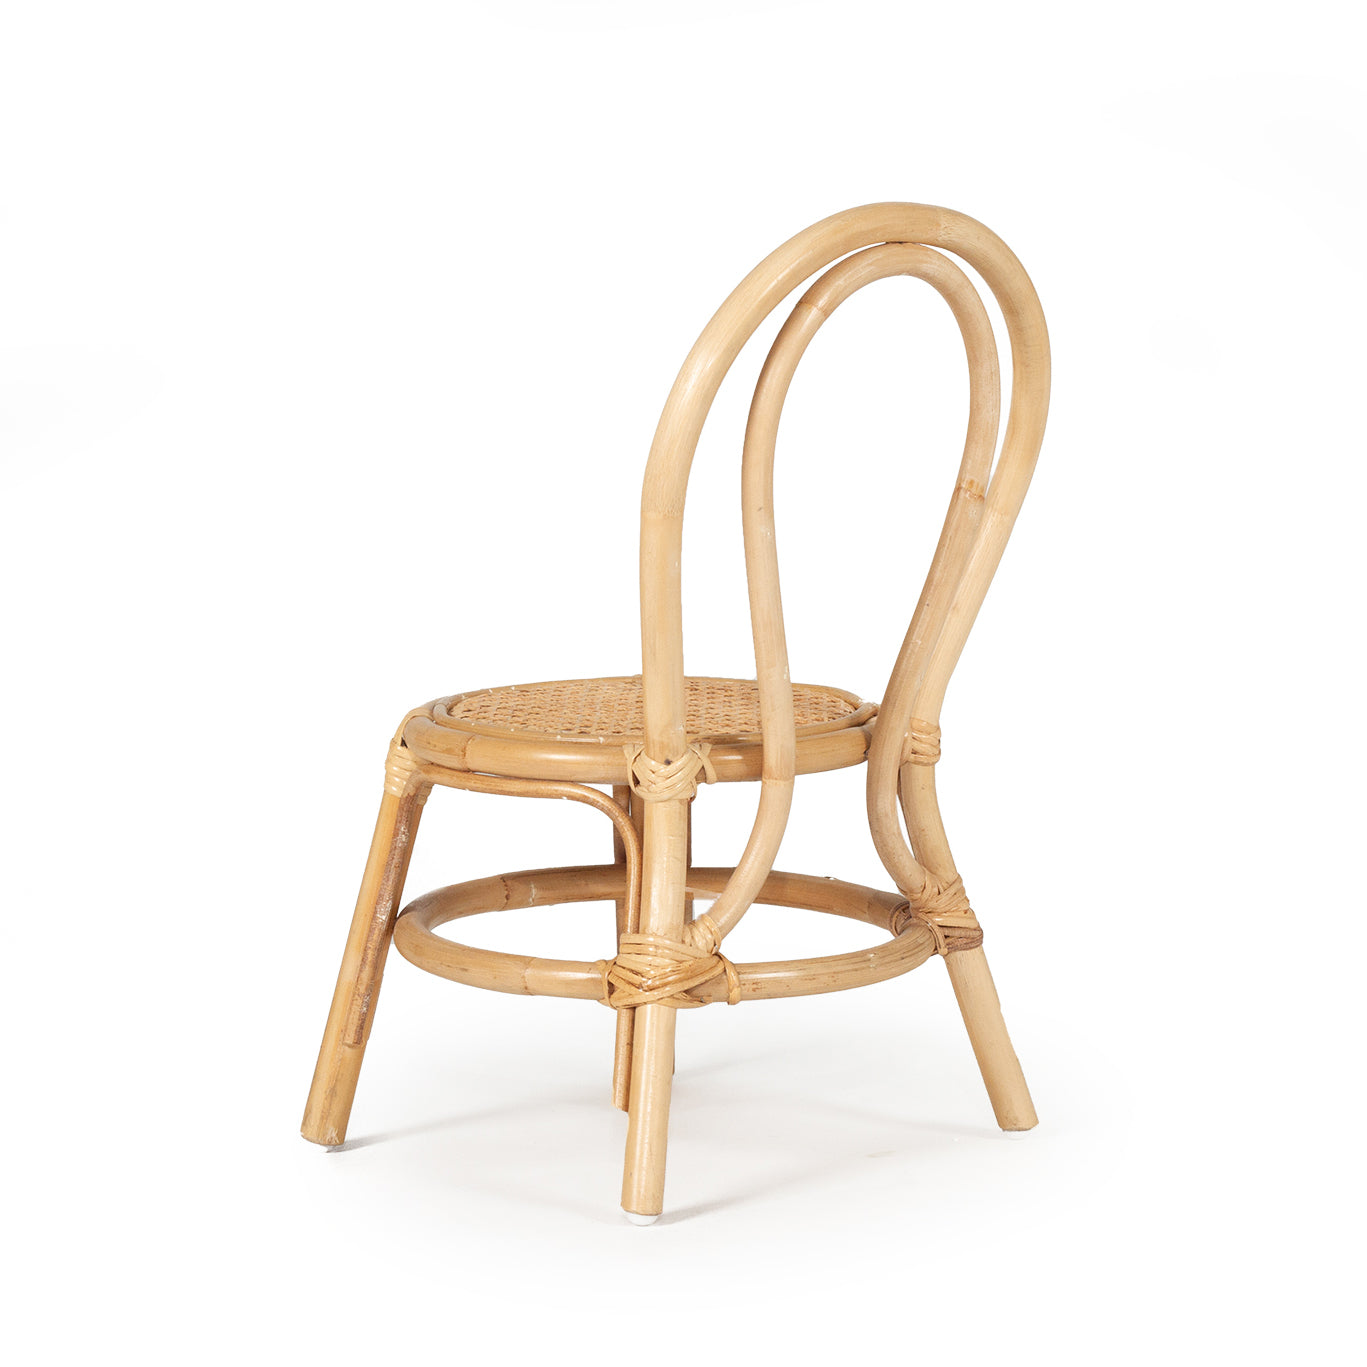 Bolan Rattan Chair for Kids – Natural - Notbrand